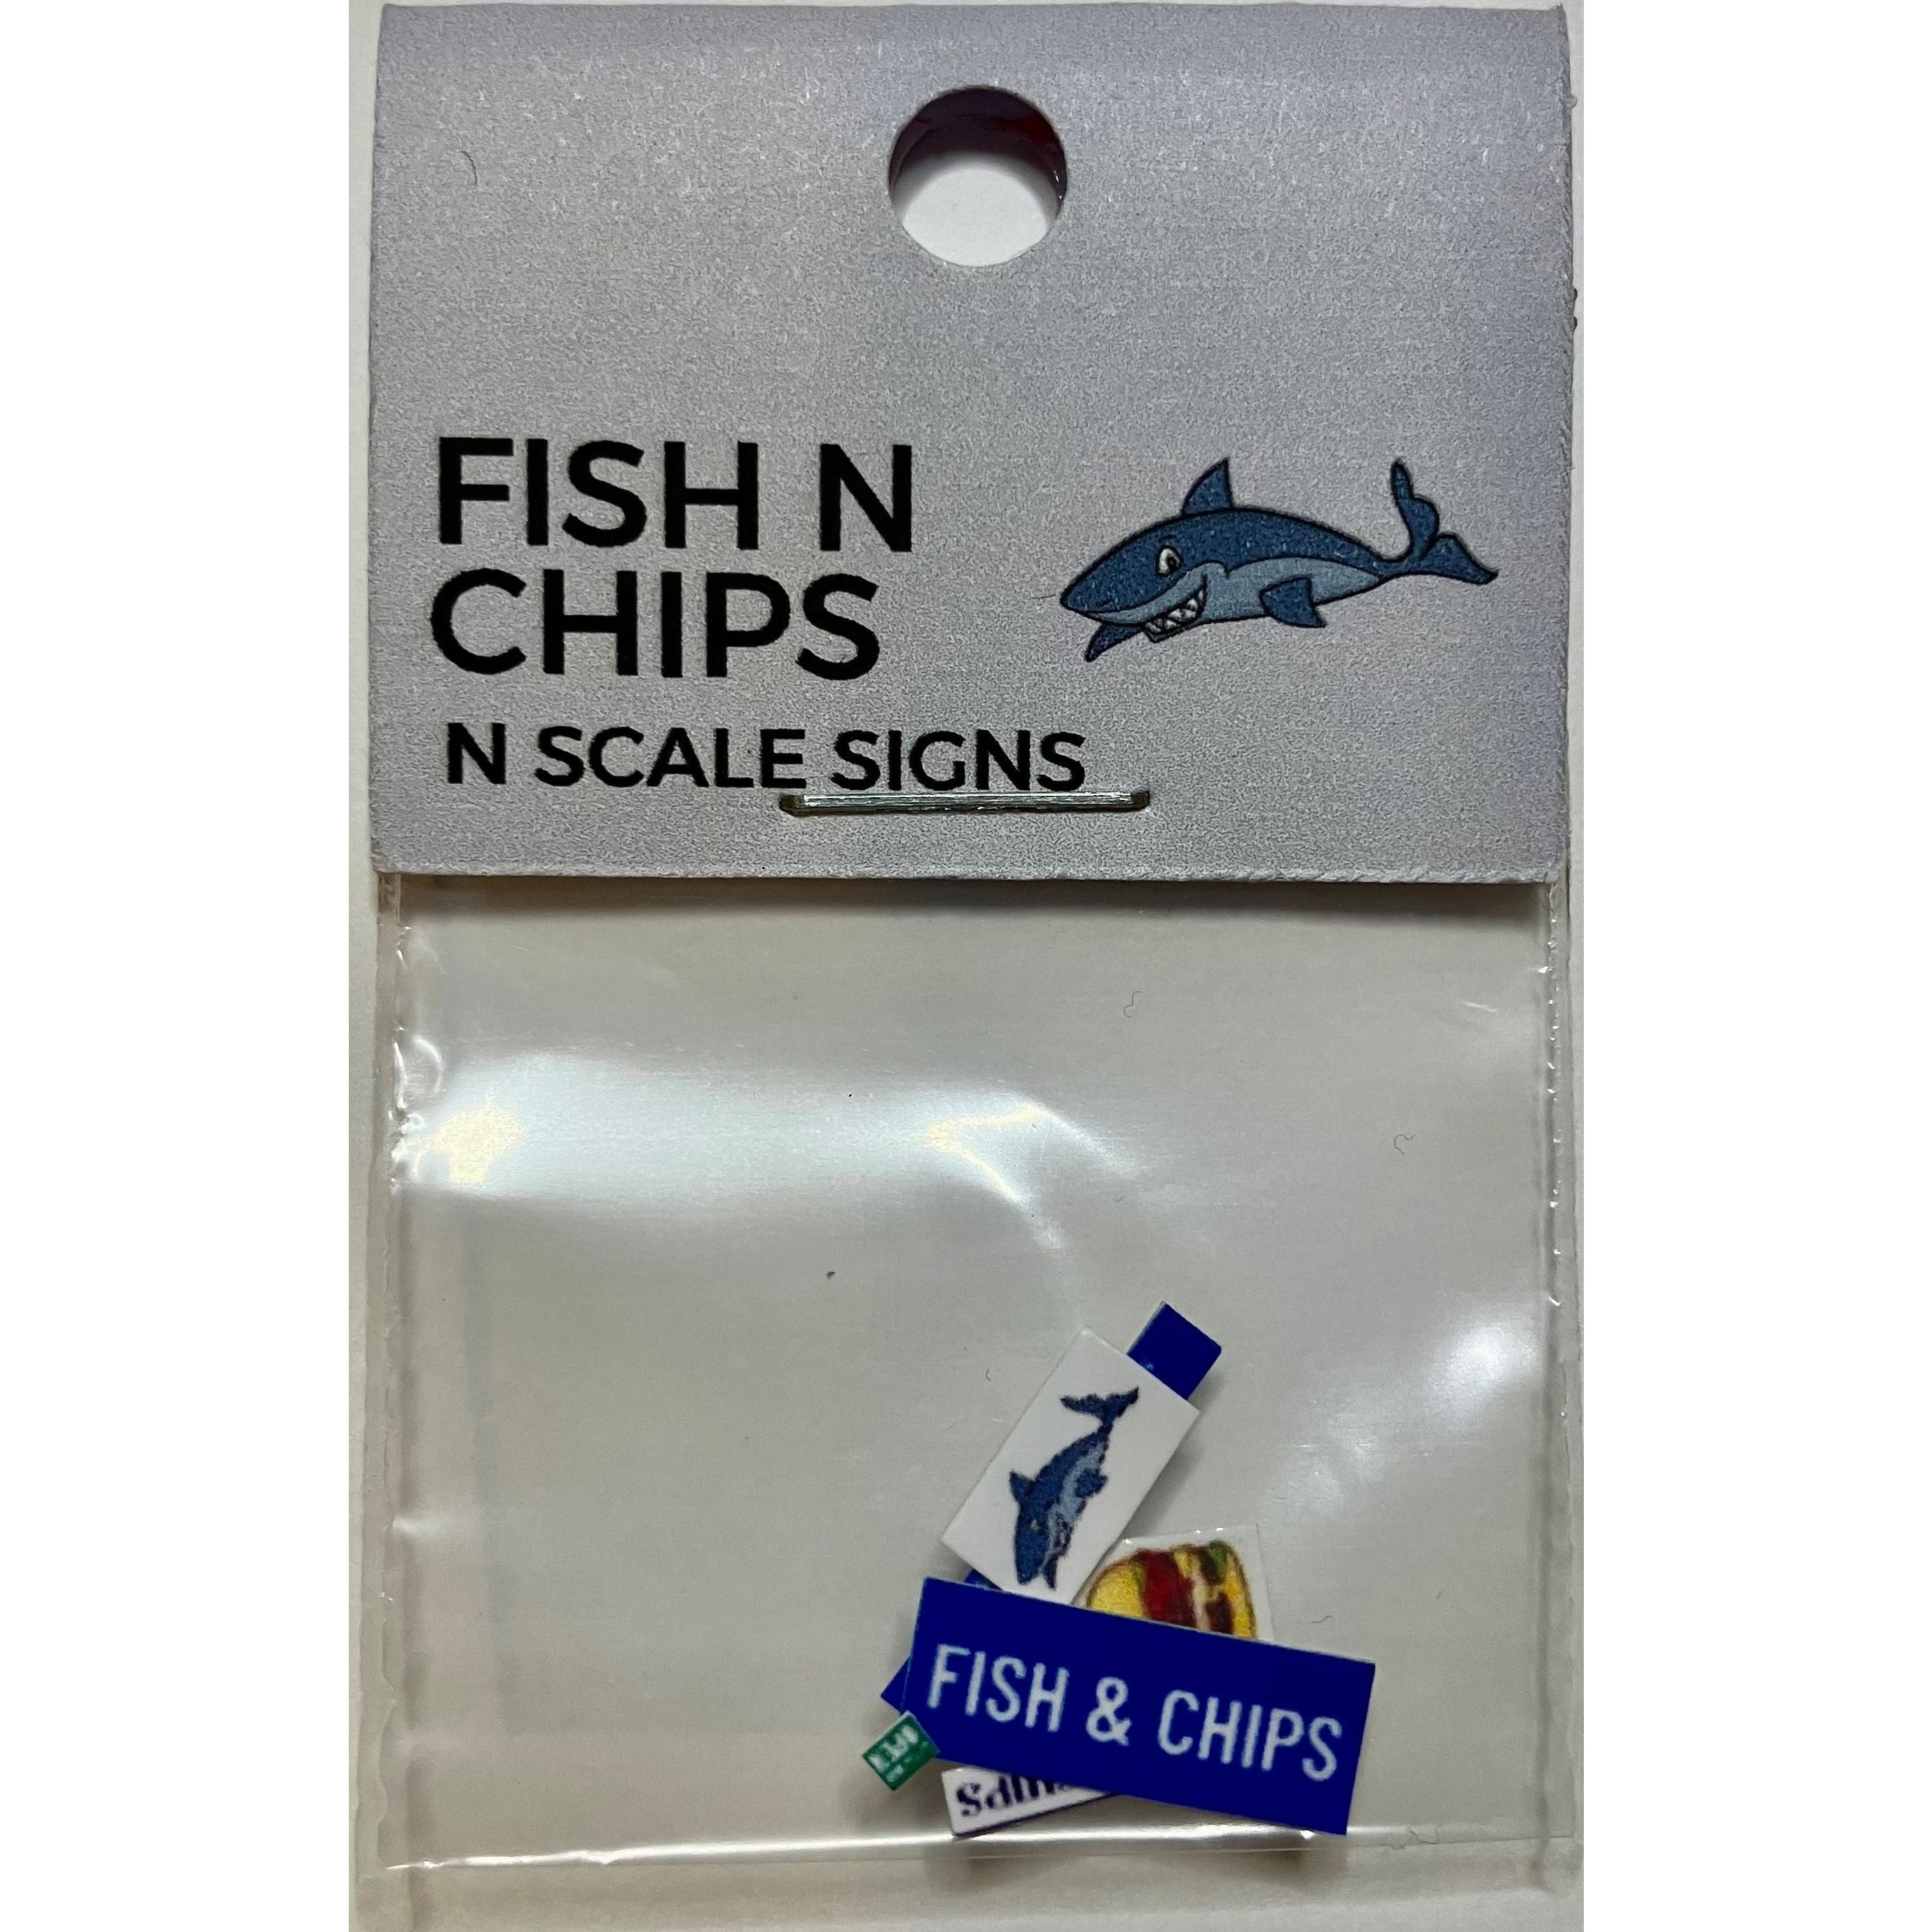 THE TRAIN GIRL Aussie Advertising "Fish n Chips" 6pk - N Scale